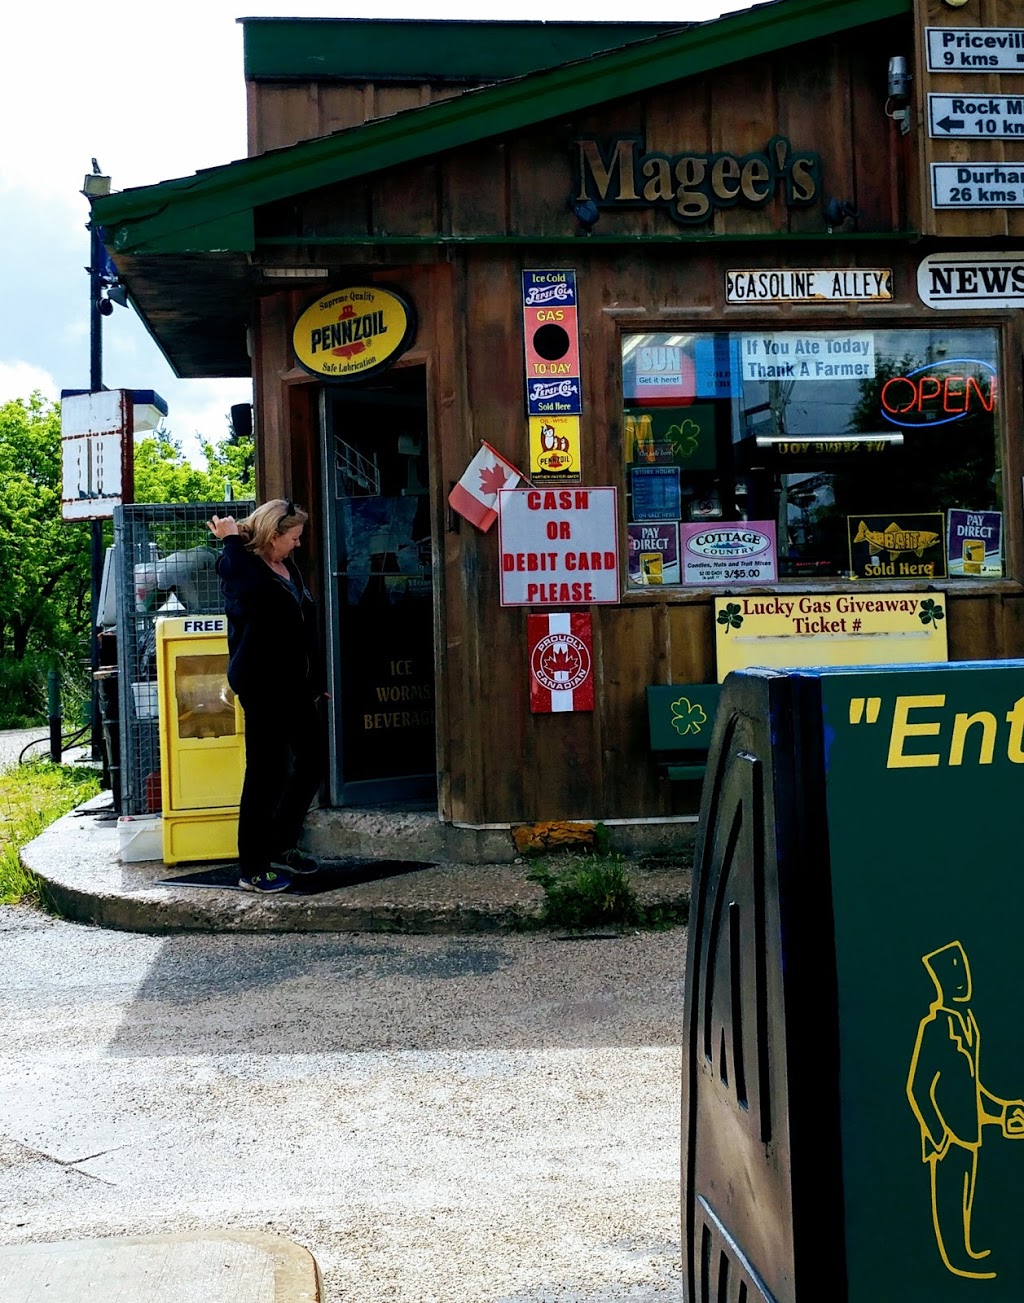 Magees Gas Bar | 125 Collingwood St, Flesherton, ON N0C 1E0, Canada | Phone: (519) 924-2422